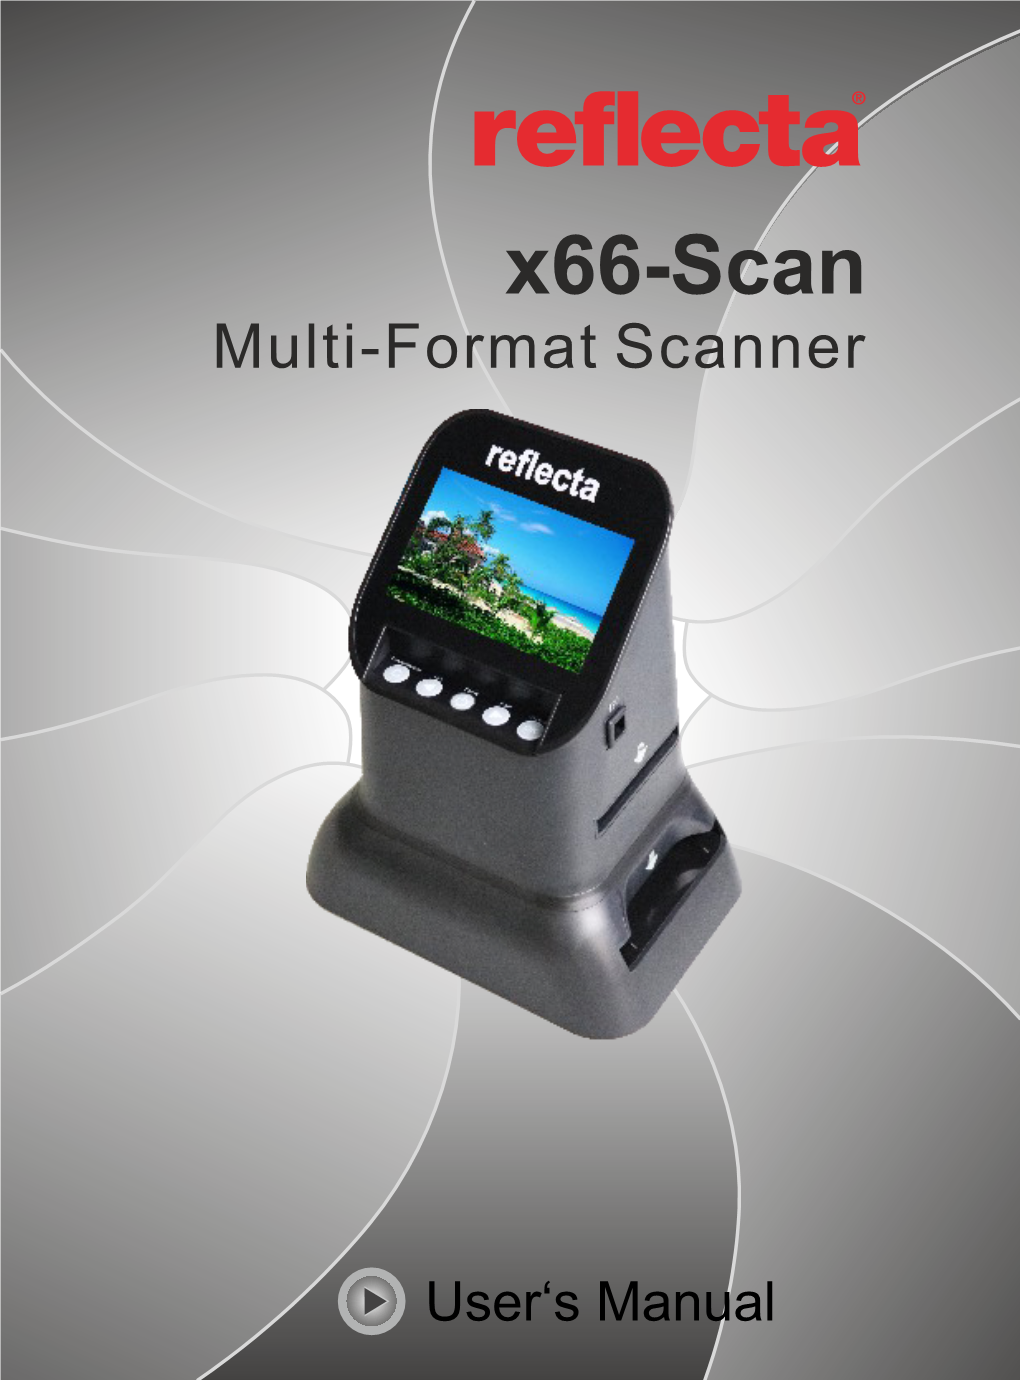 X66-Scan Multi-Format Scanner